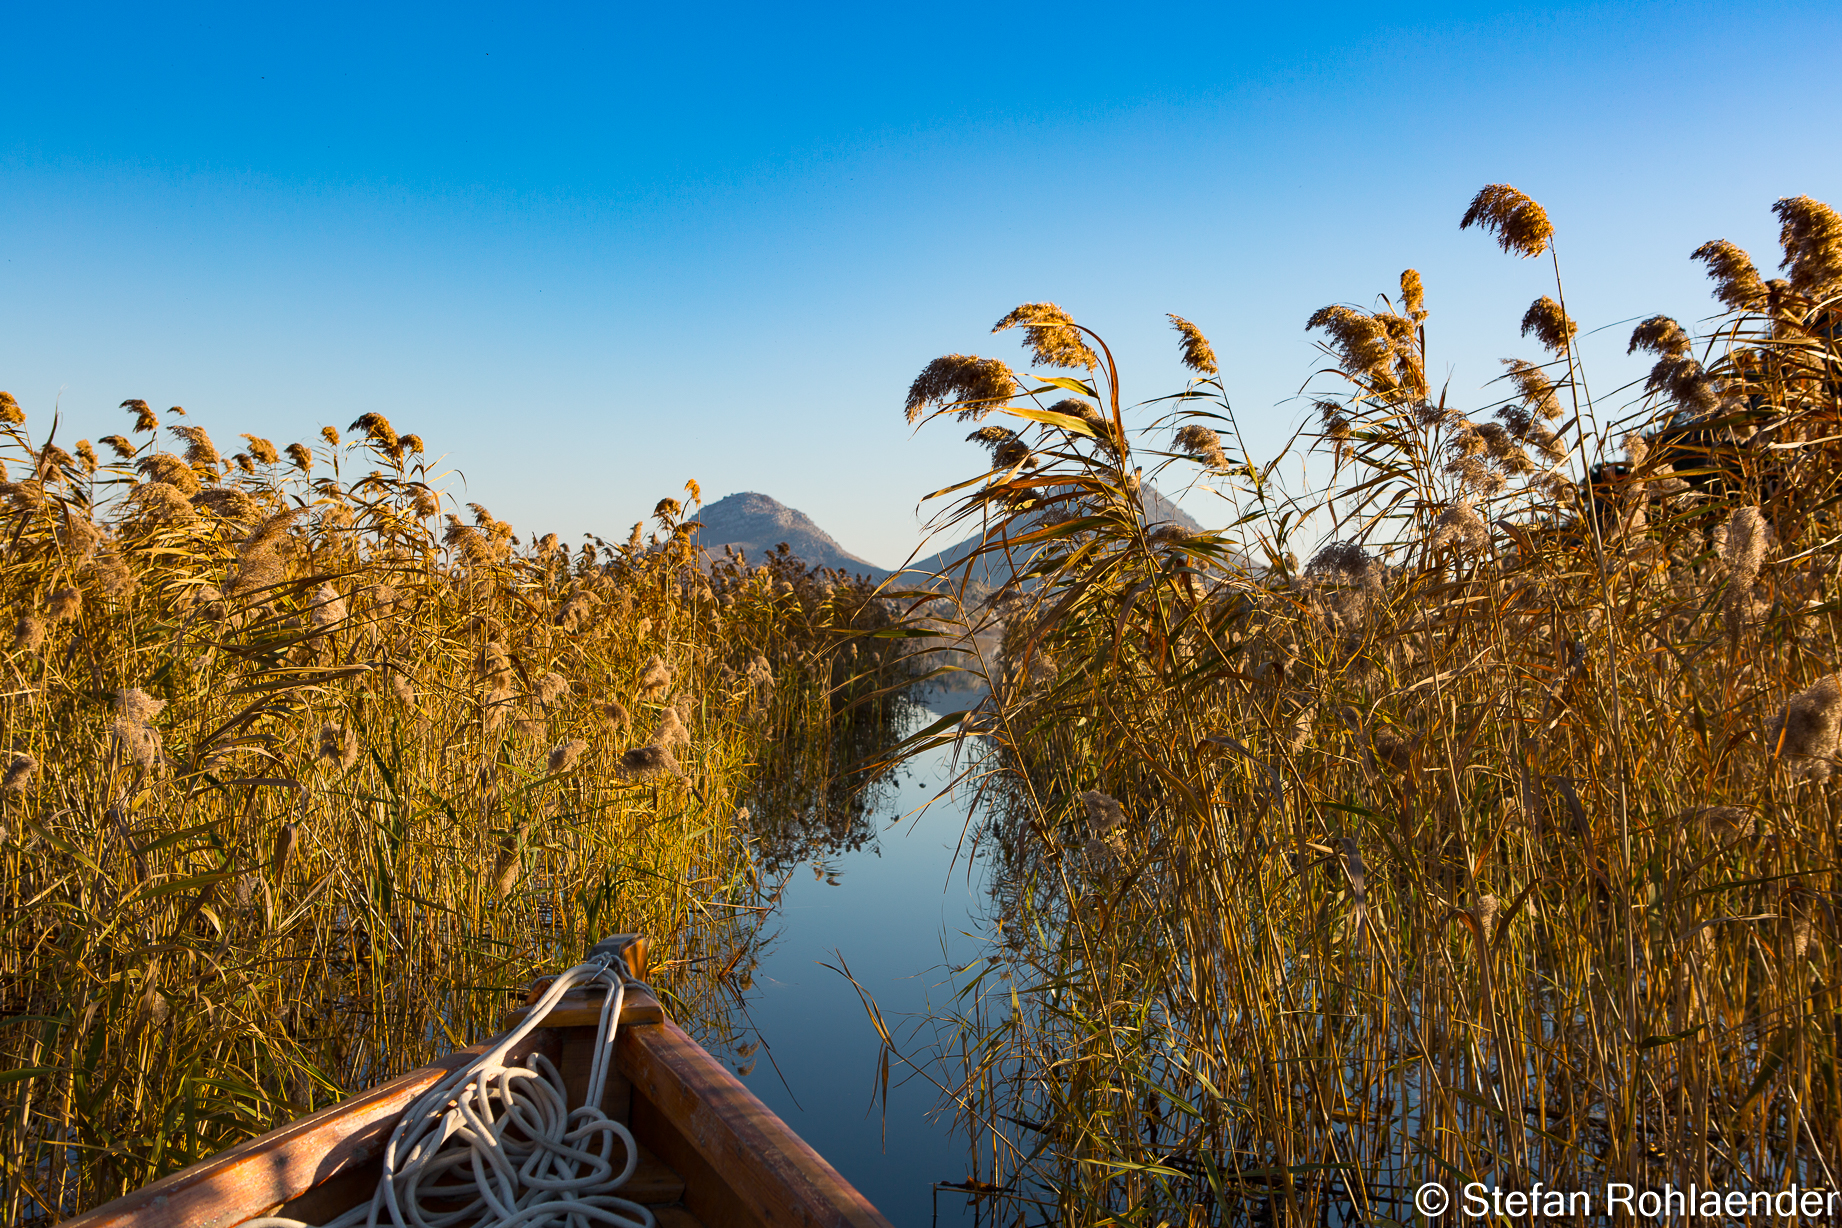 Late afternoon boat ride on Skadar Lake.